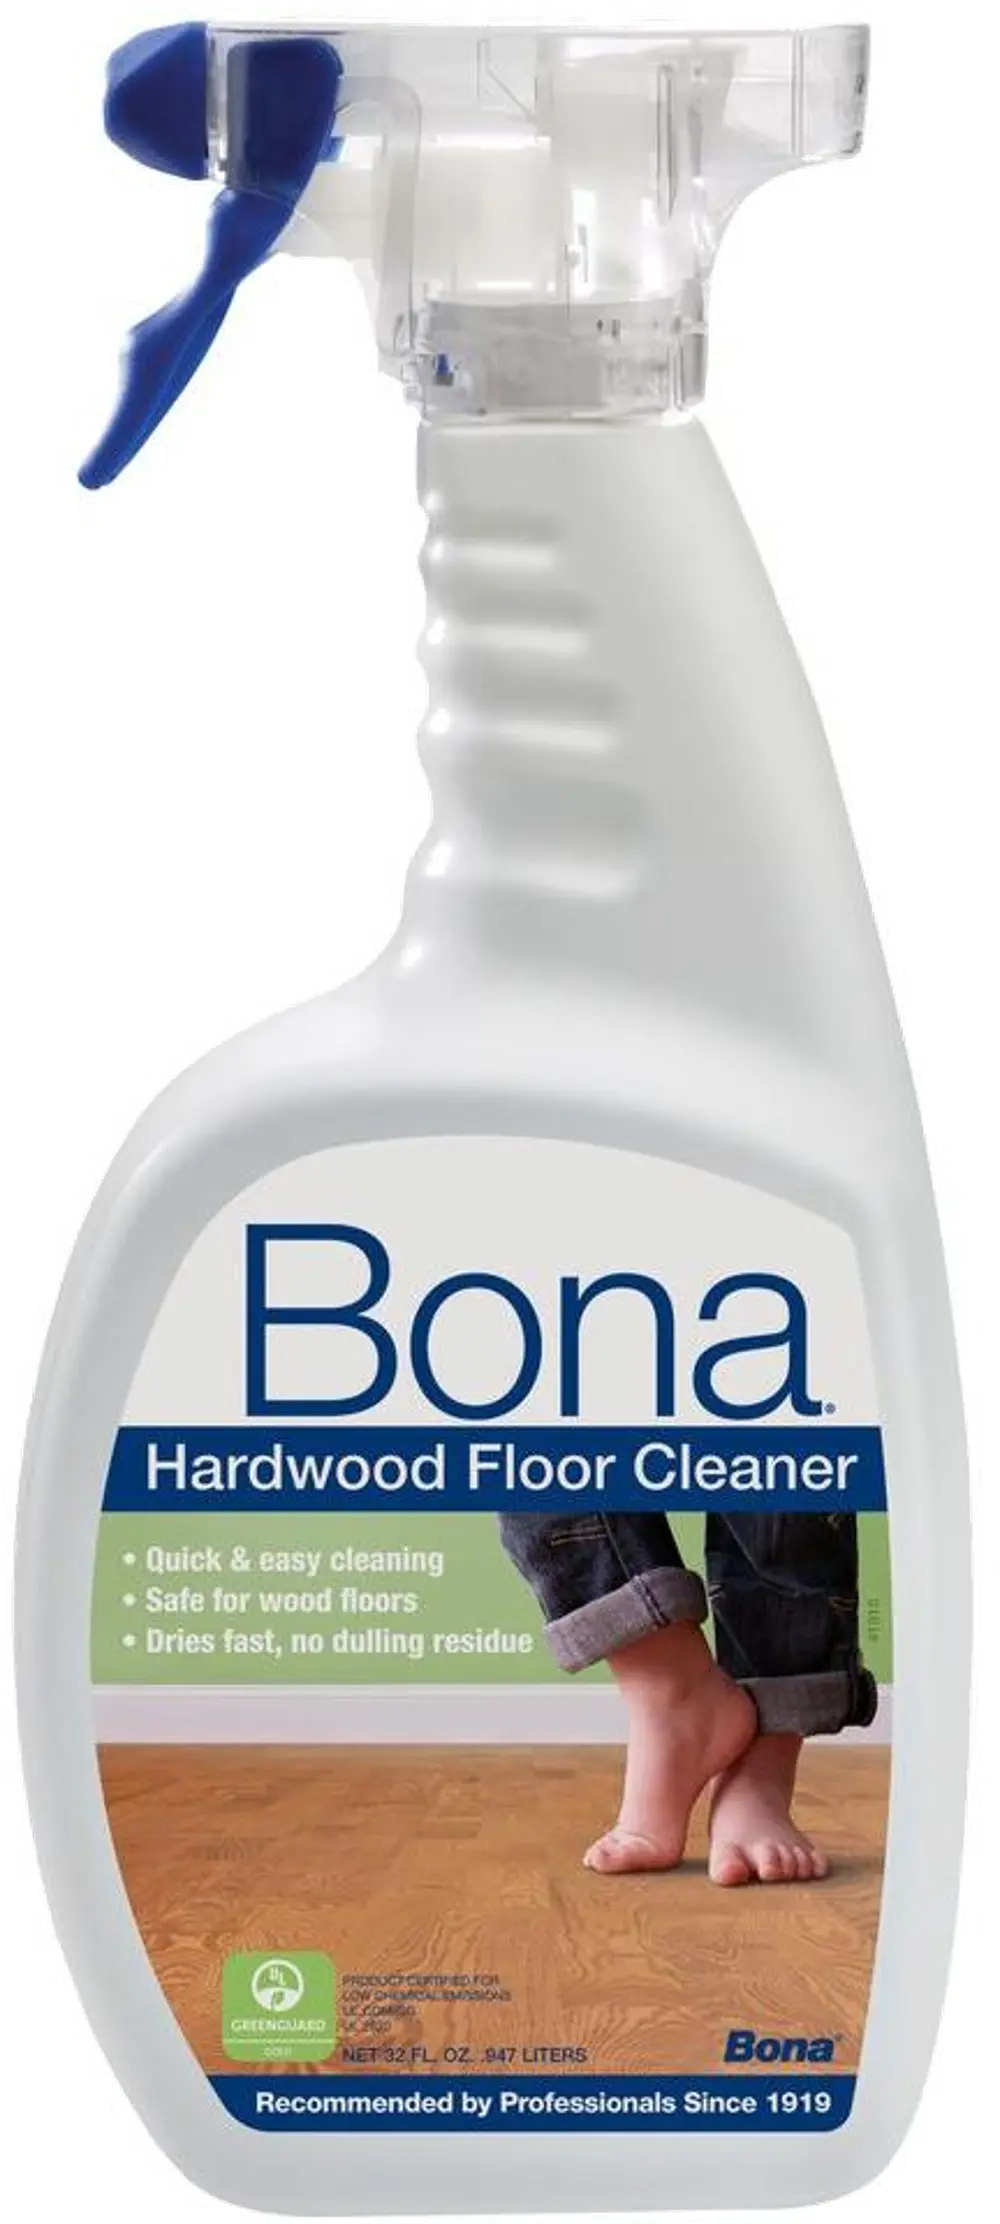 BONU.WM700051187.32 Bona Hardwood Floor Cleaner - 32 oz.-1